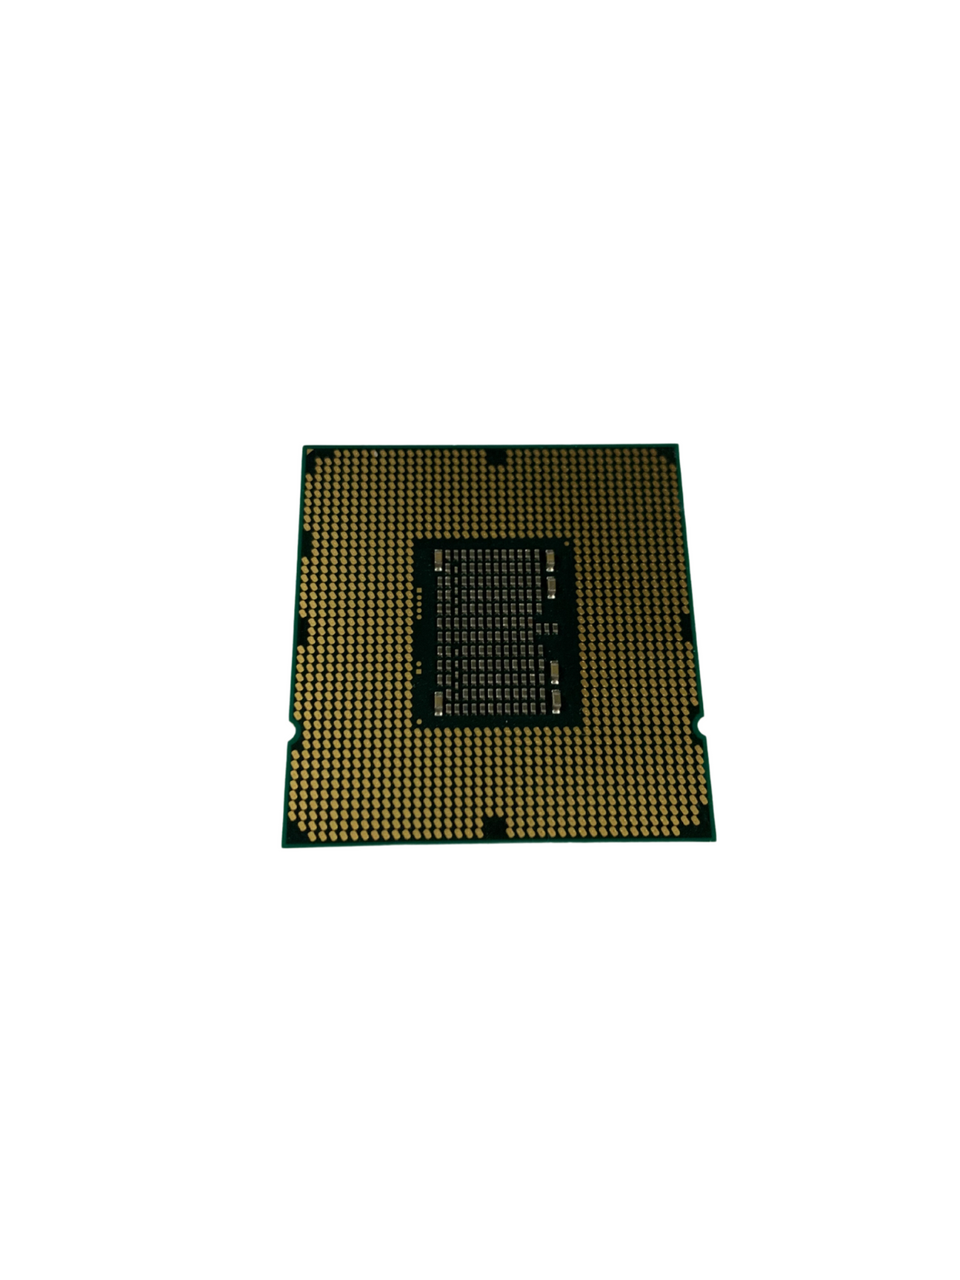 Intel SLBW2 Xeon W3690 3.46 GHz 6-Core 12M 6.4GT/s SLBW2 LGA1366 Processor w60